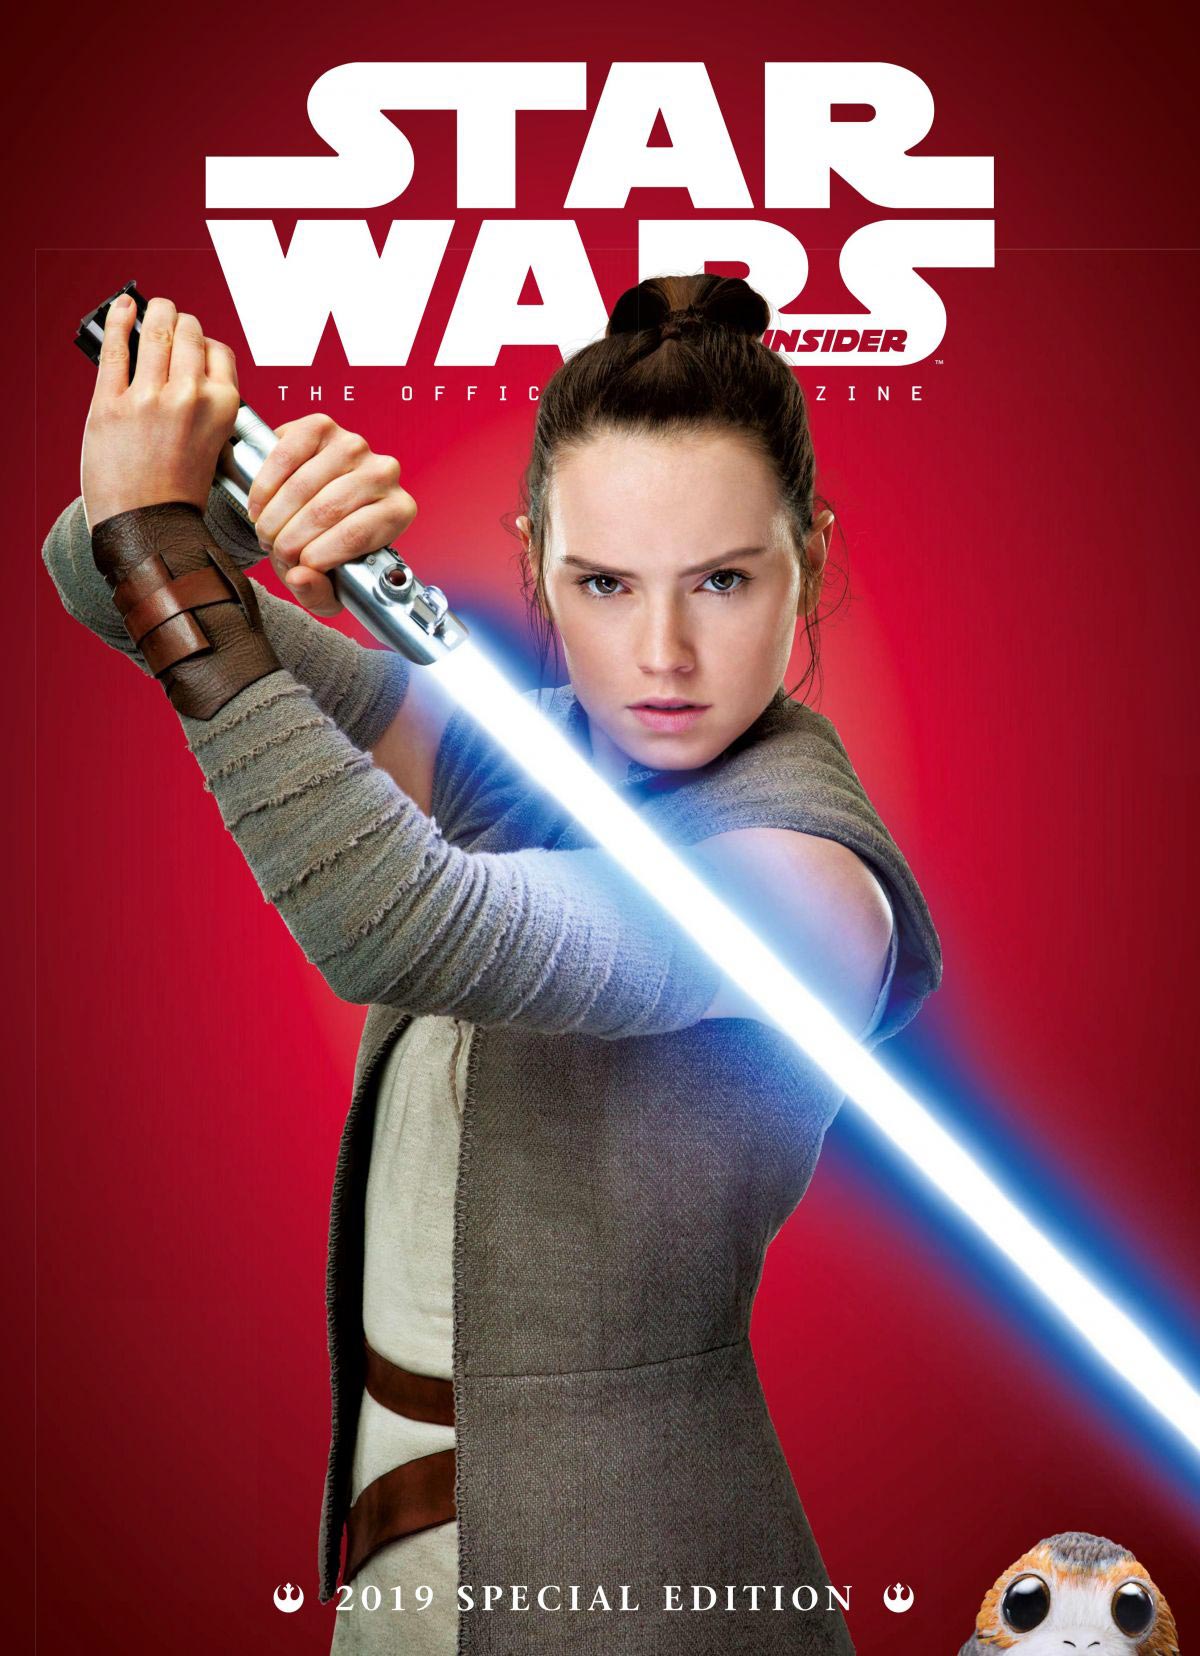 Daisy Ridley in Star Wars Insider, Special Edition 2019